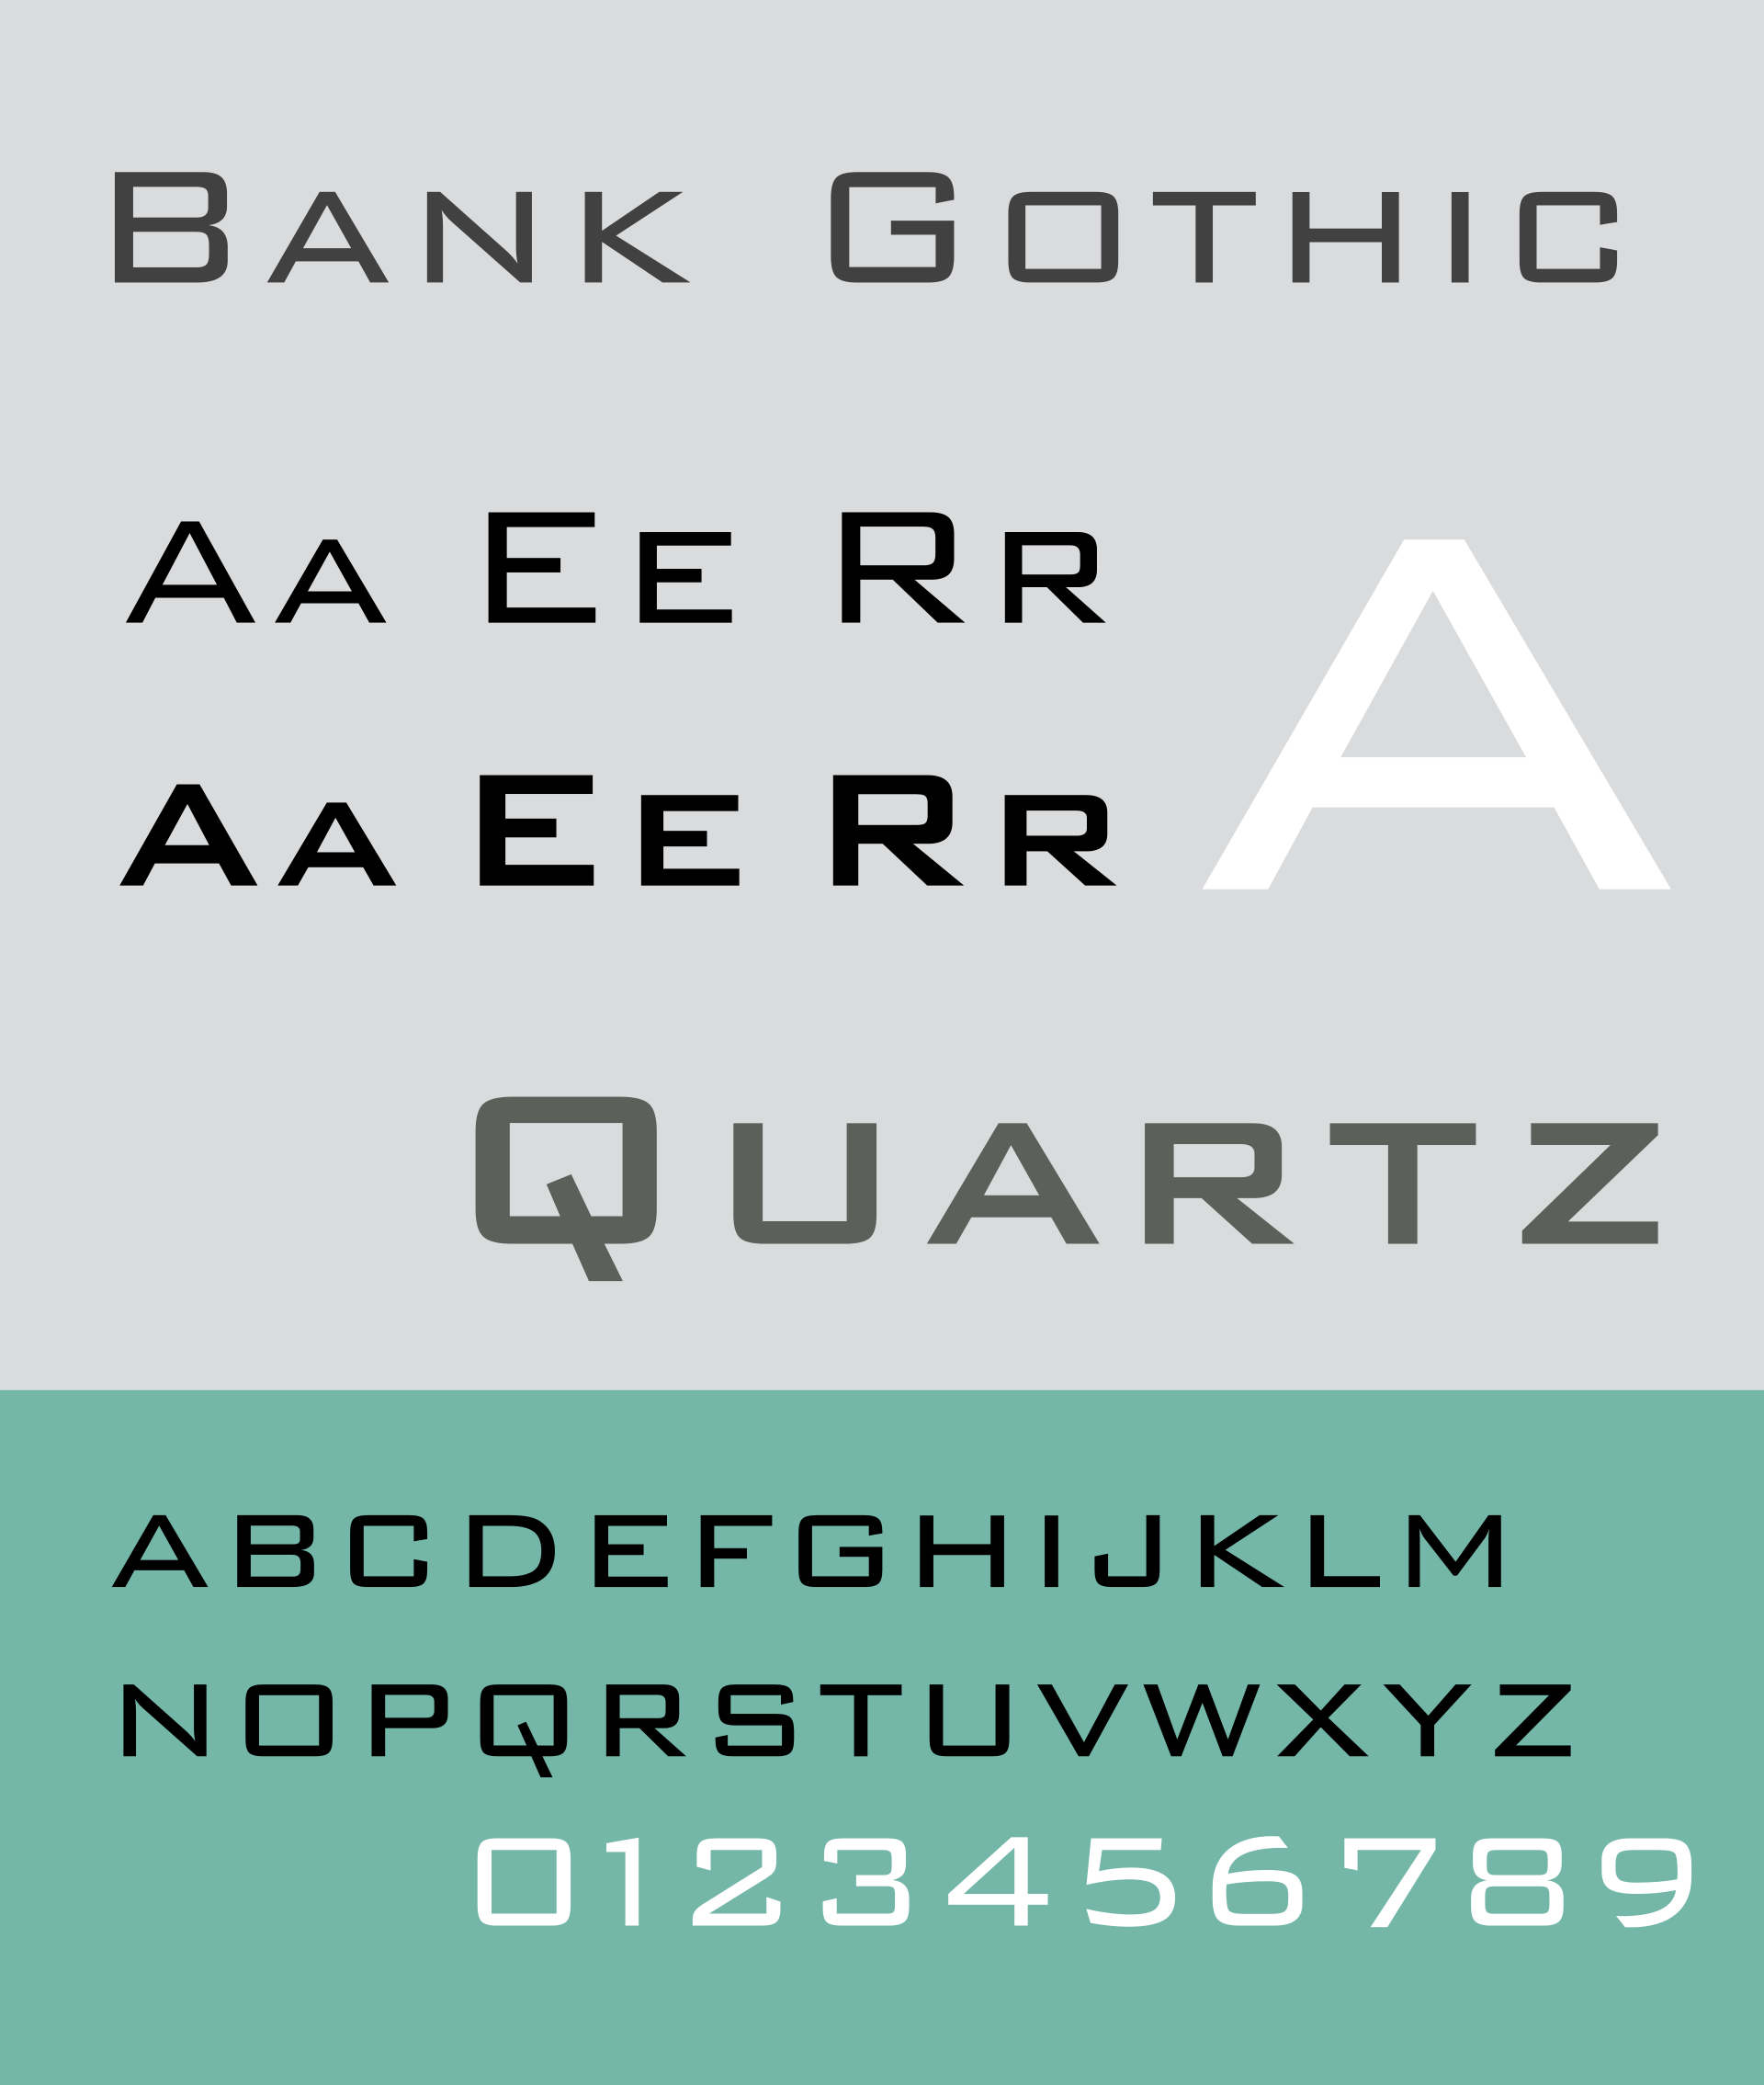 Bank gothic font free mac